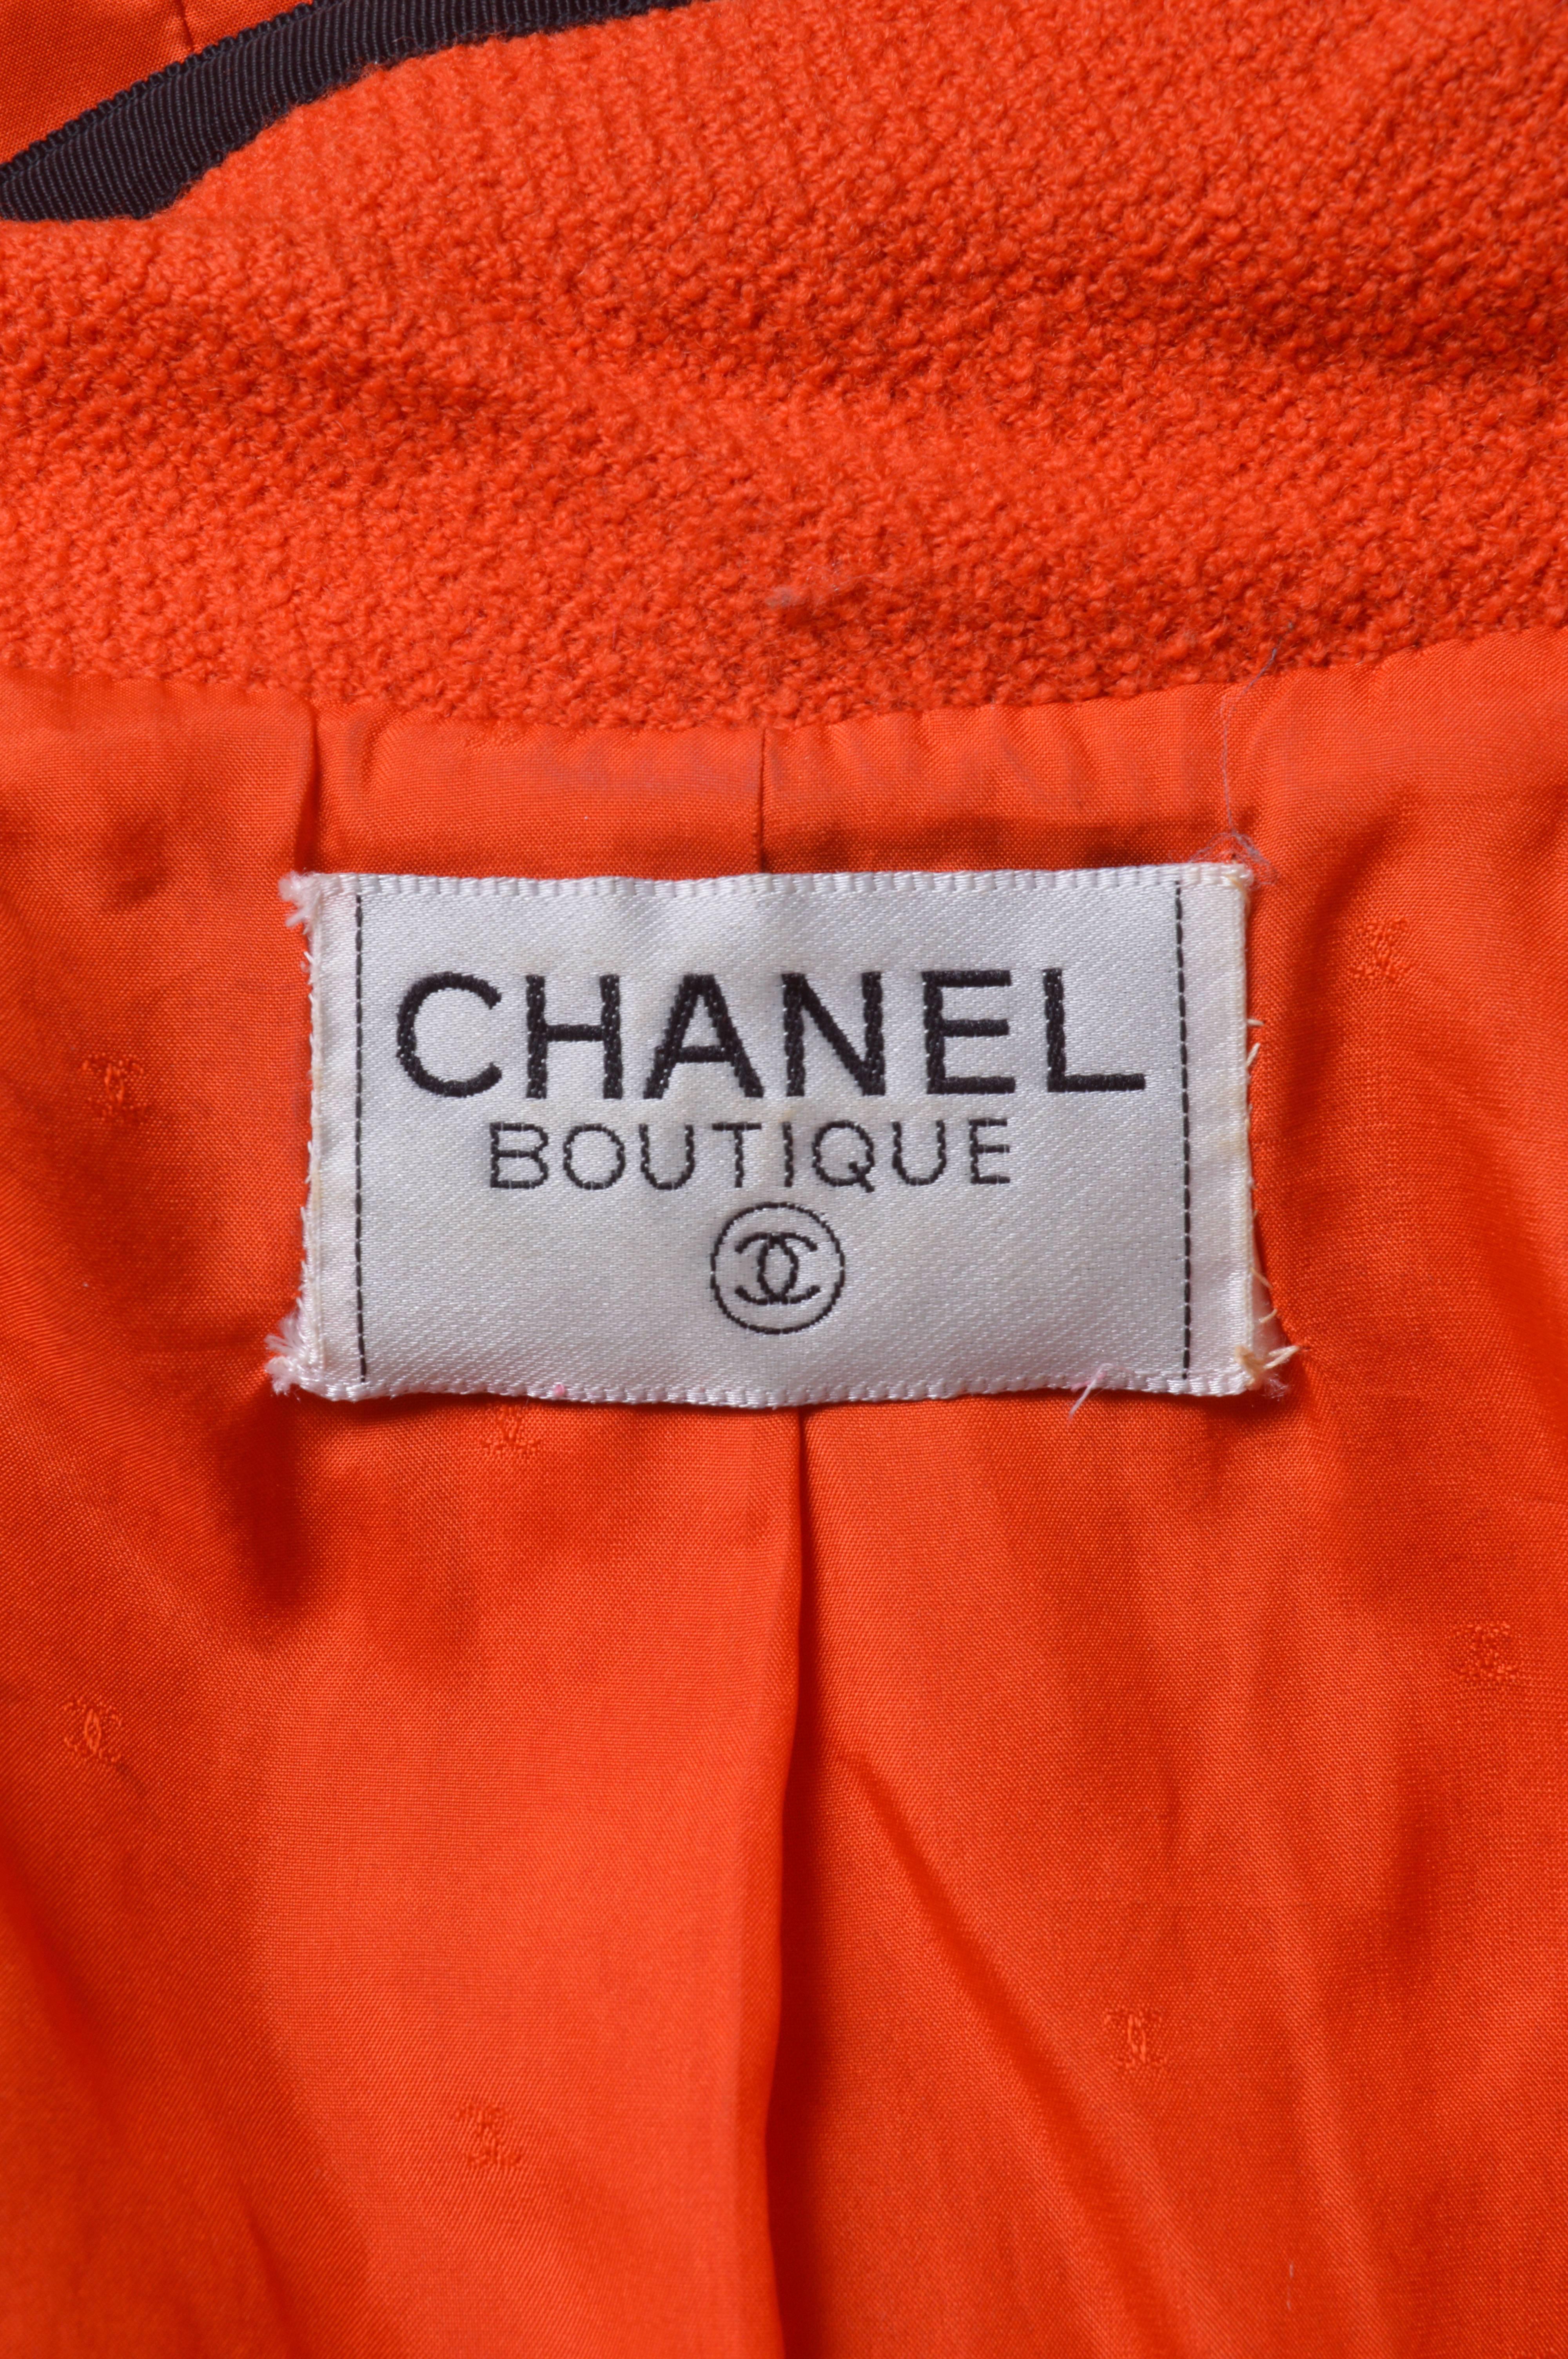 Chanel Boutique Orange and Black Skirt Suit 4